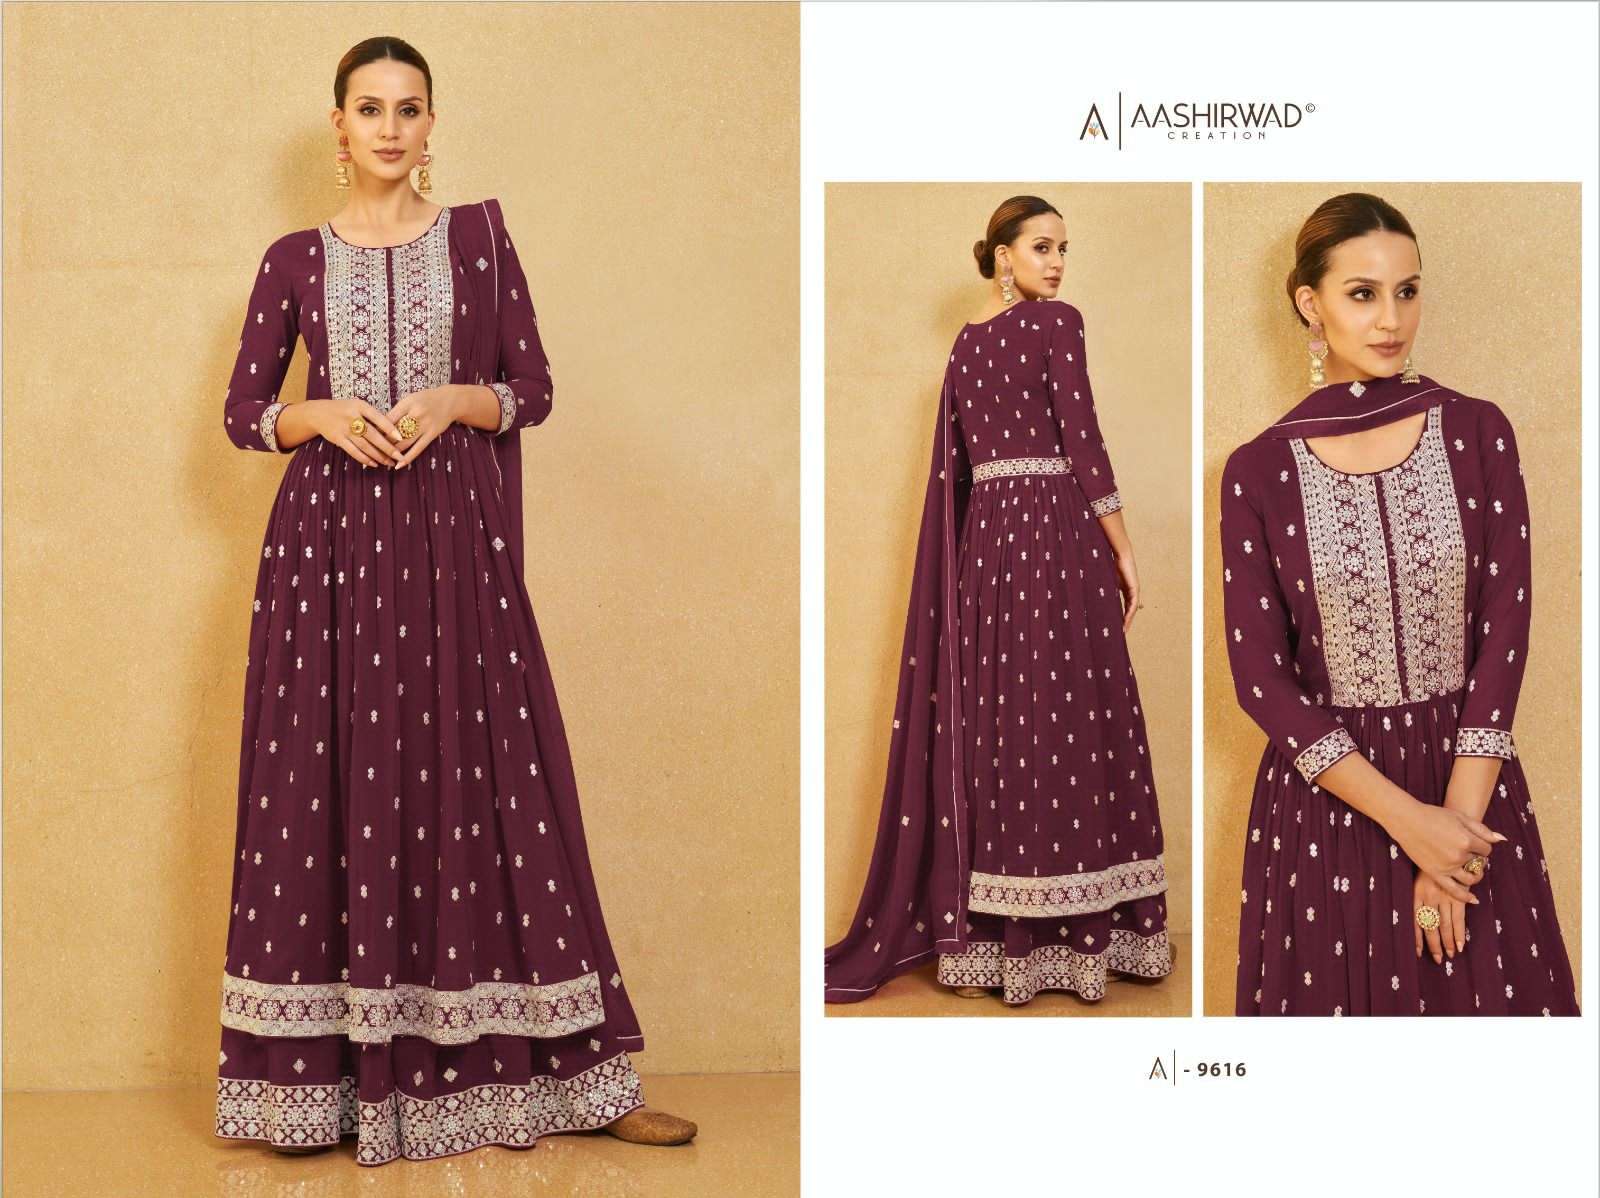 aashirwad creation nura 9613-9617 series real georgette designer salwar suits catalogue design 2023 